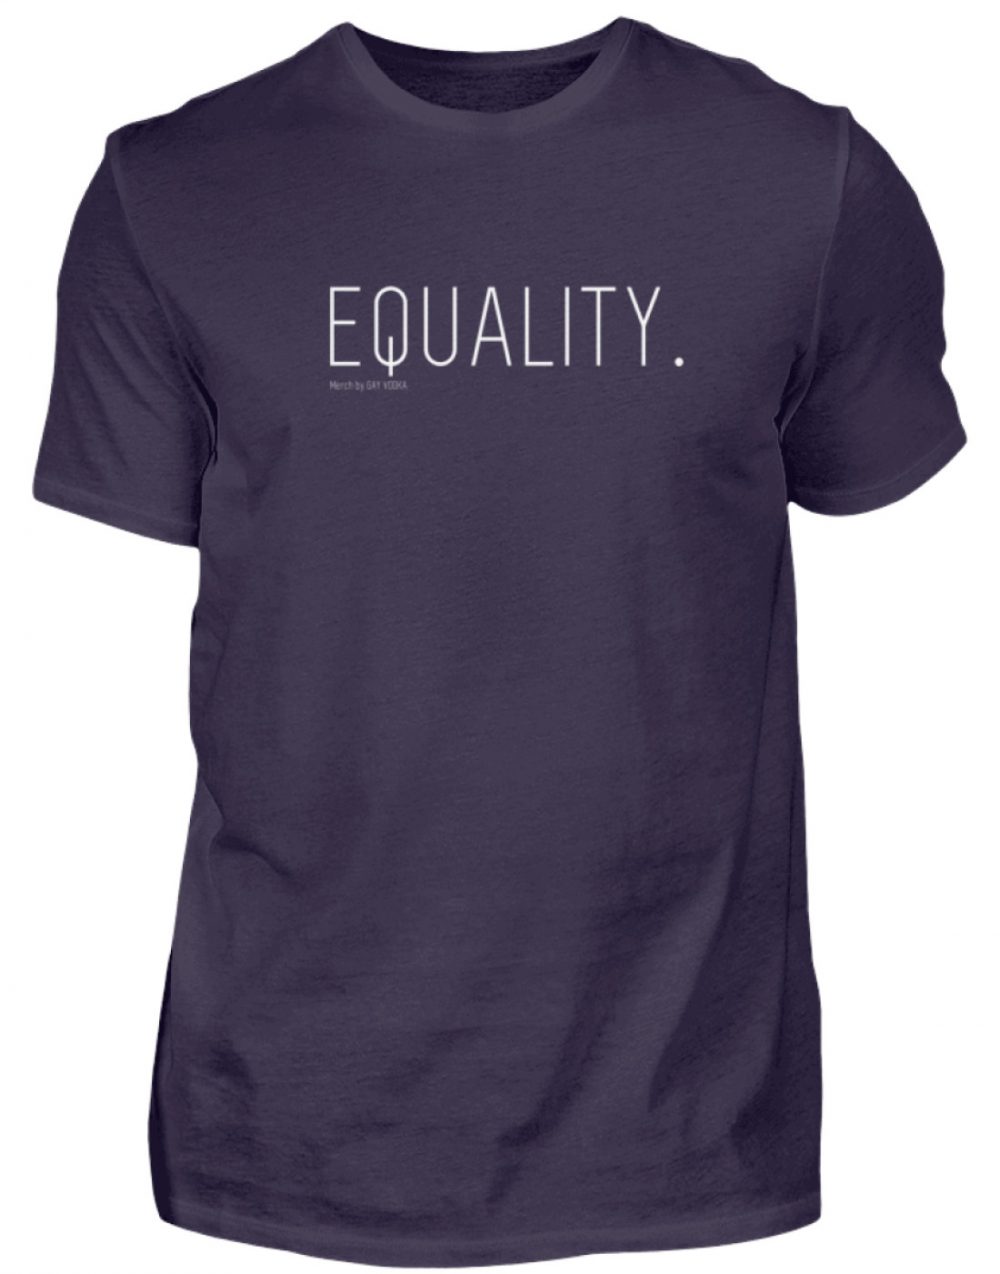 EQUALITY. - Herren Premiumshirt-2911